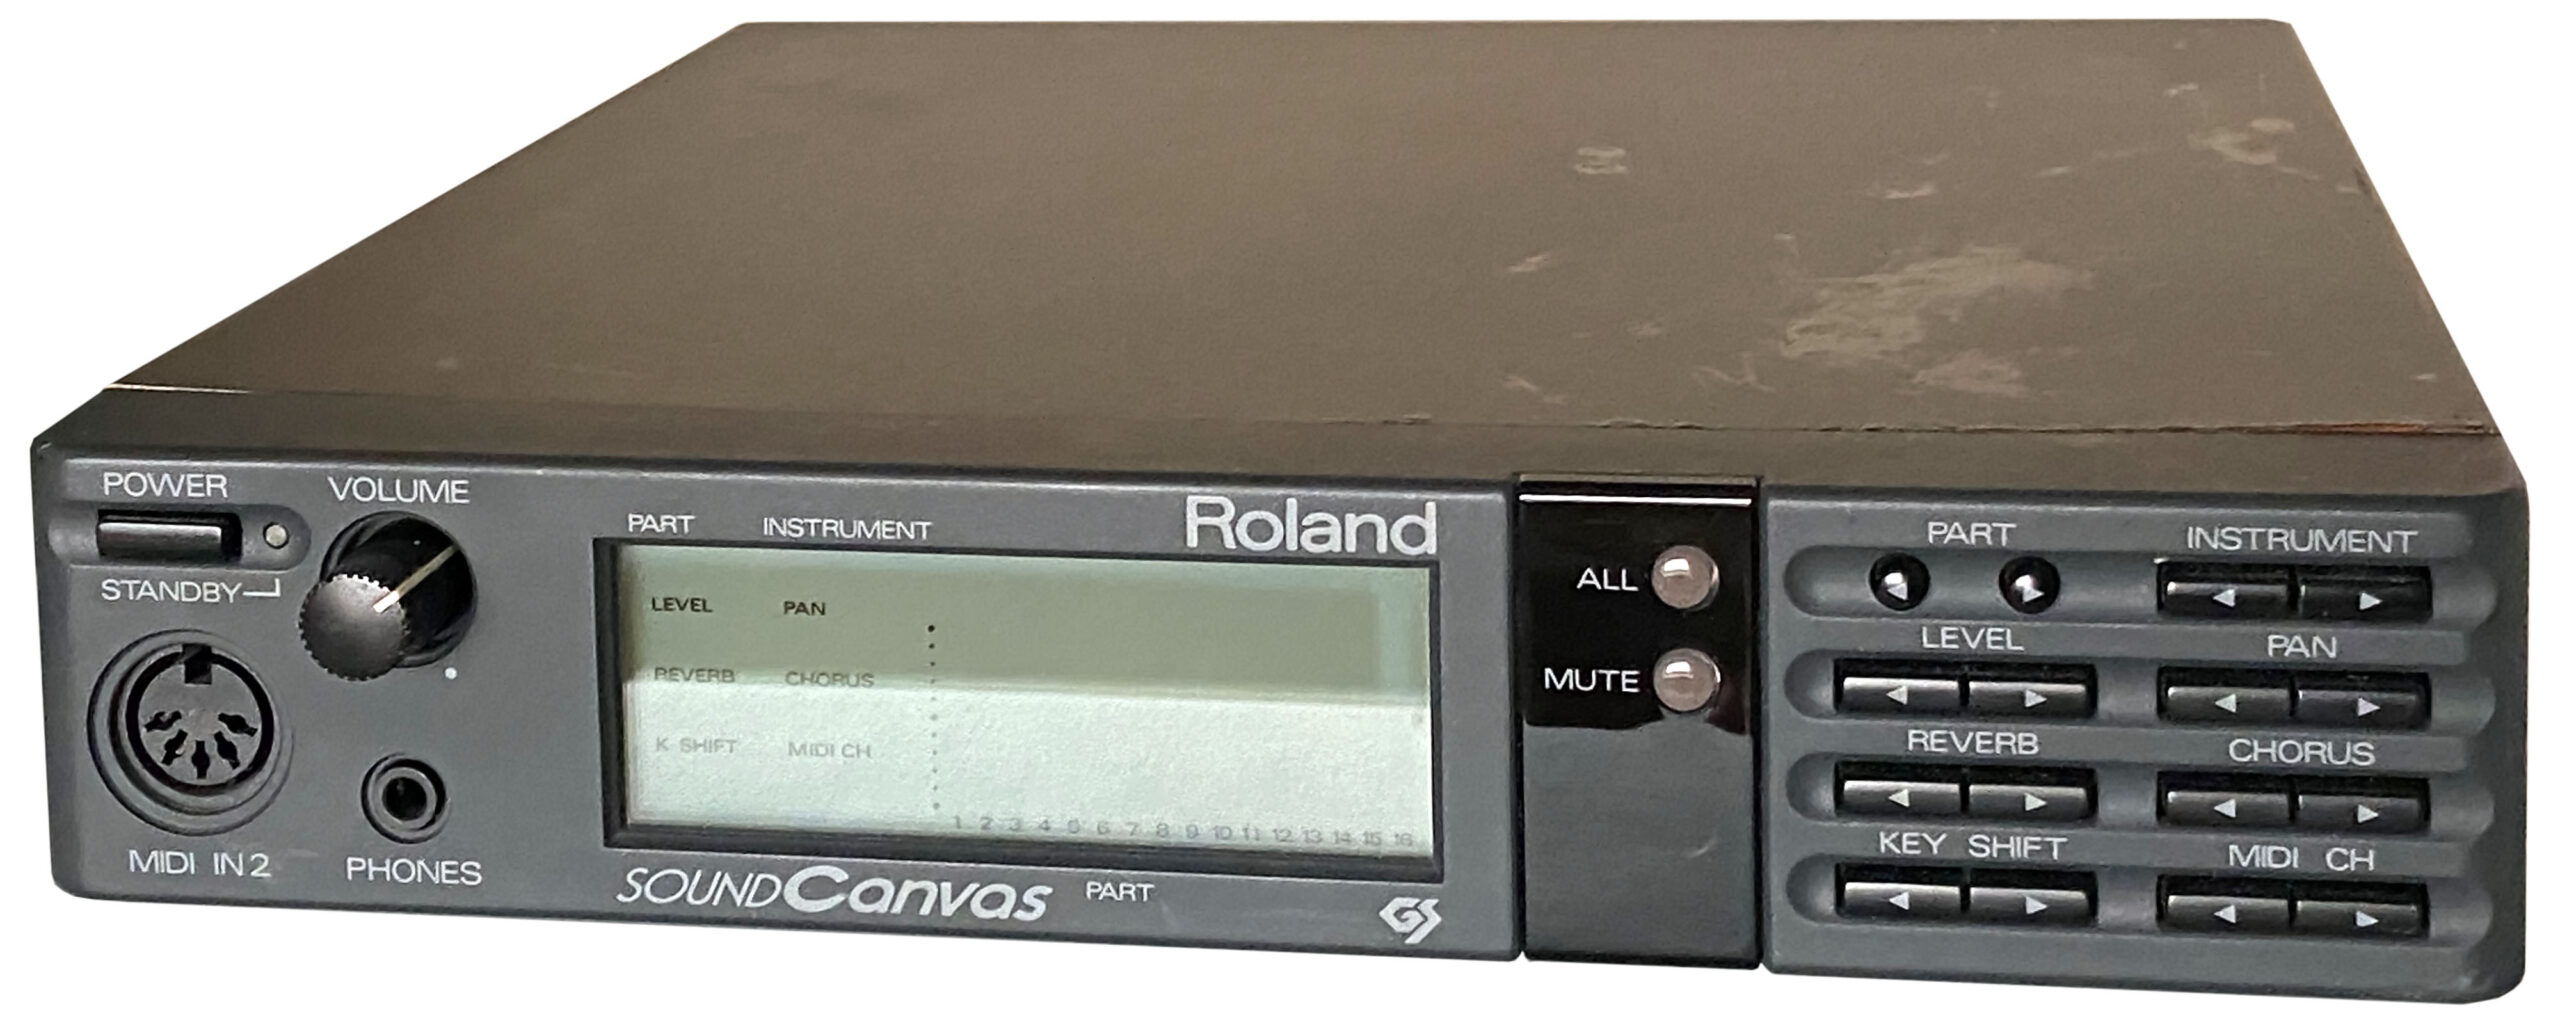 Roland Sound Canvas SC-55 [GS Logo] -